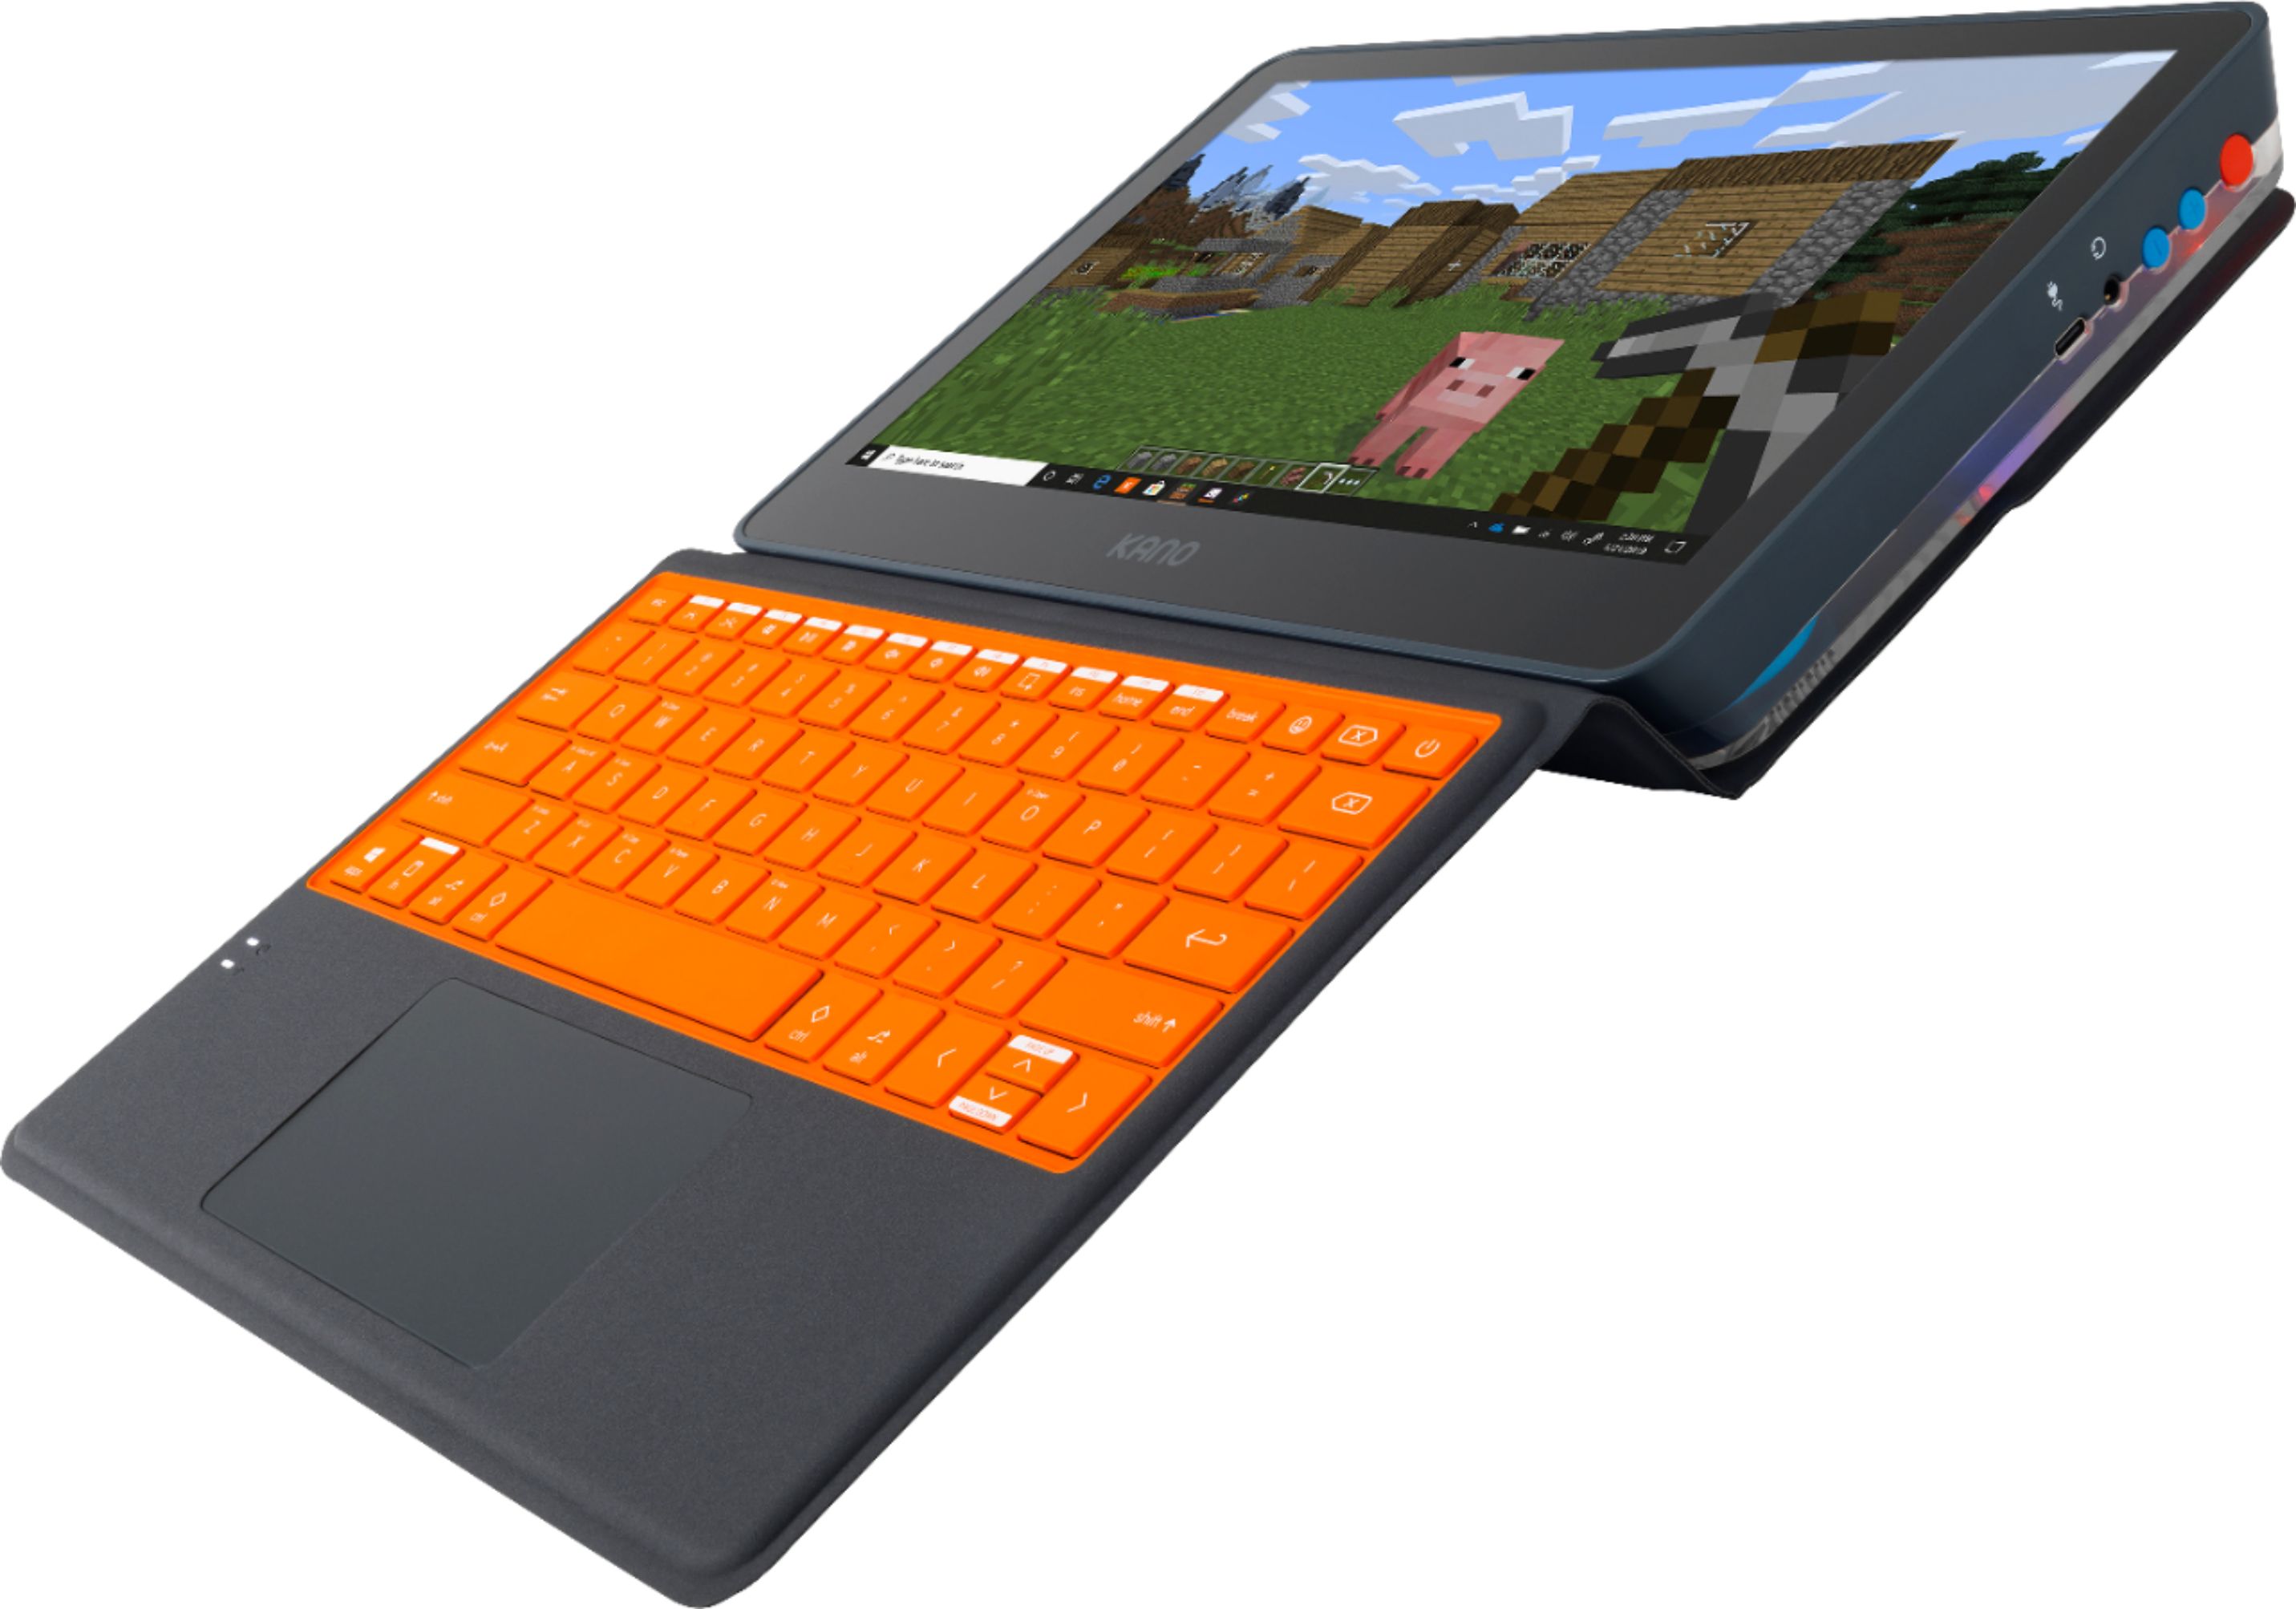 Kano PC Celeron N4000 11.6" Kids' Touch-Screen Laptop & Tablet (2020) $149.99 @Best Buy